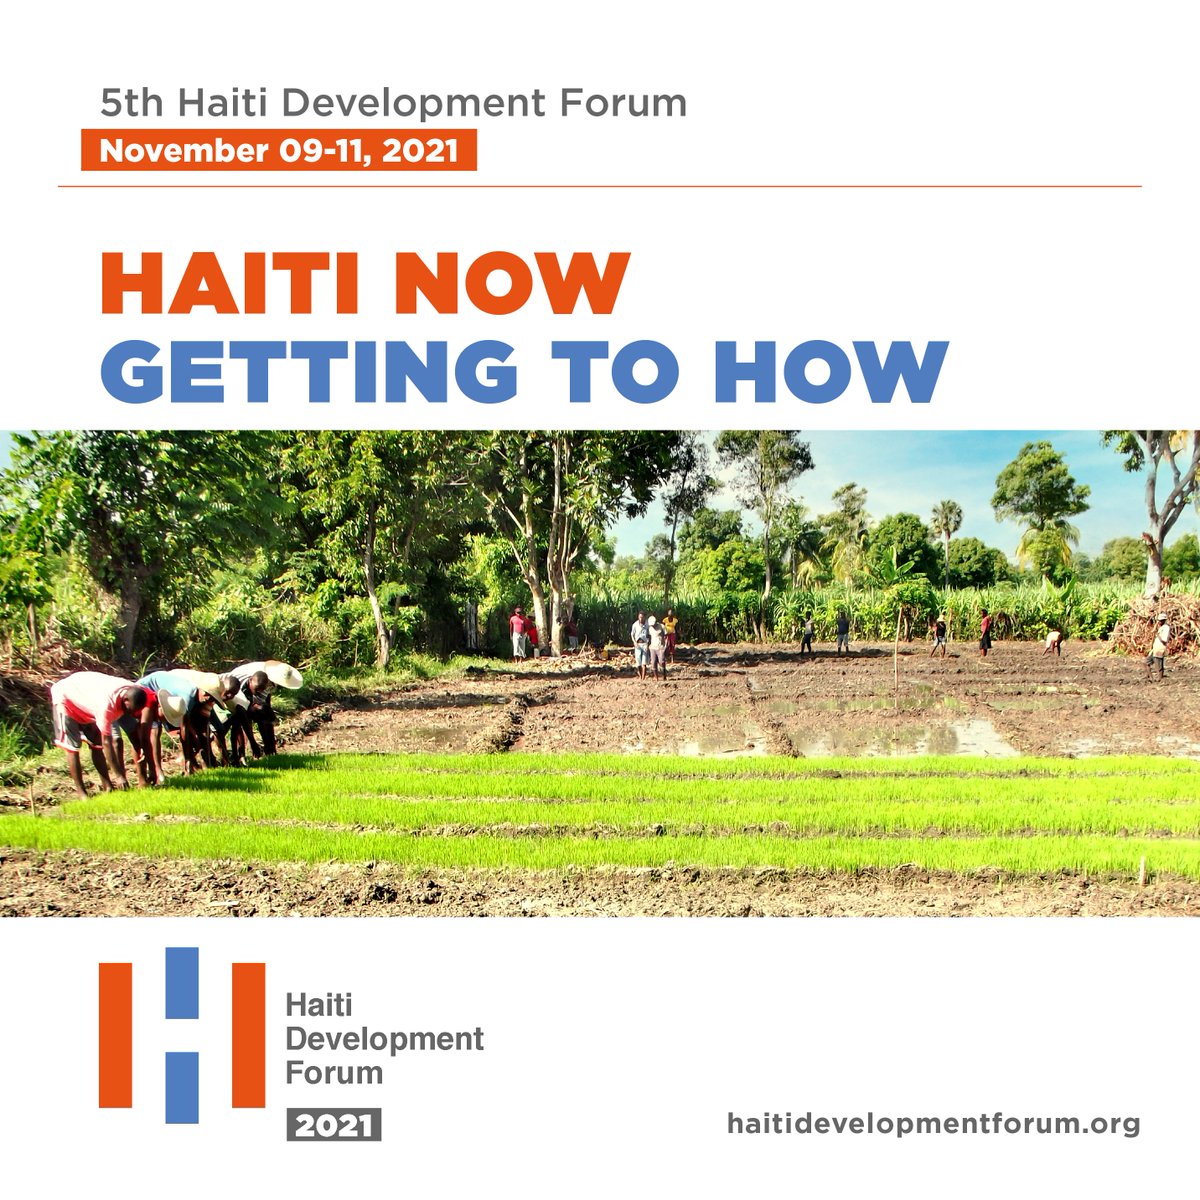 Join HDI & the Haiti development community at the 5th Haiti Development Forum in November to learn how best to support Haitians to respond to current crises & pursue long-term development. 

Registration & Agenda details coming soon! #HaitiDevForum2021 #haiti #haitiearthquake2021